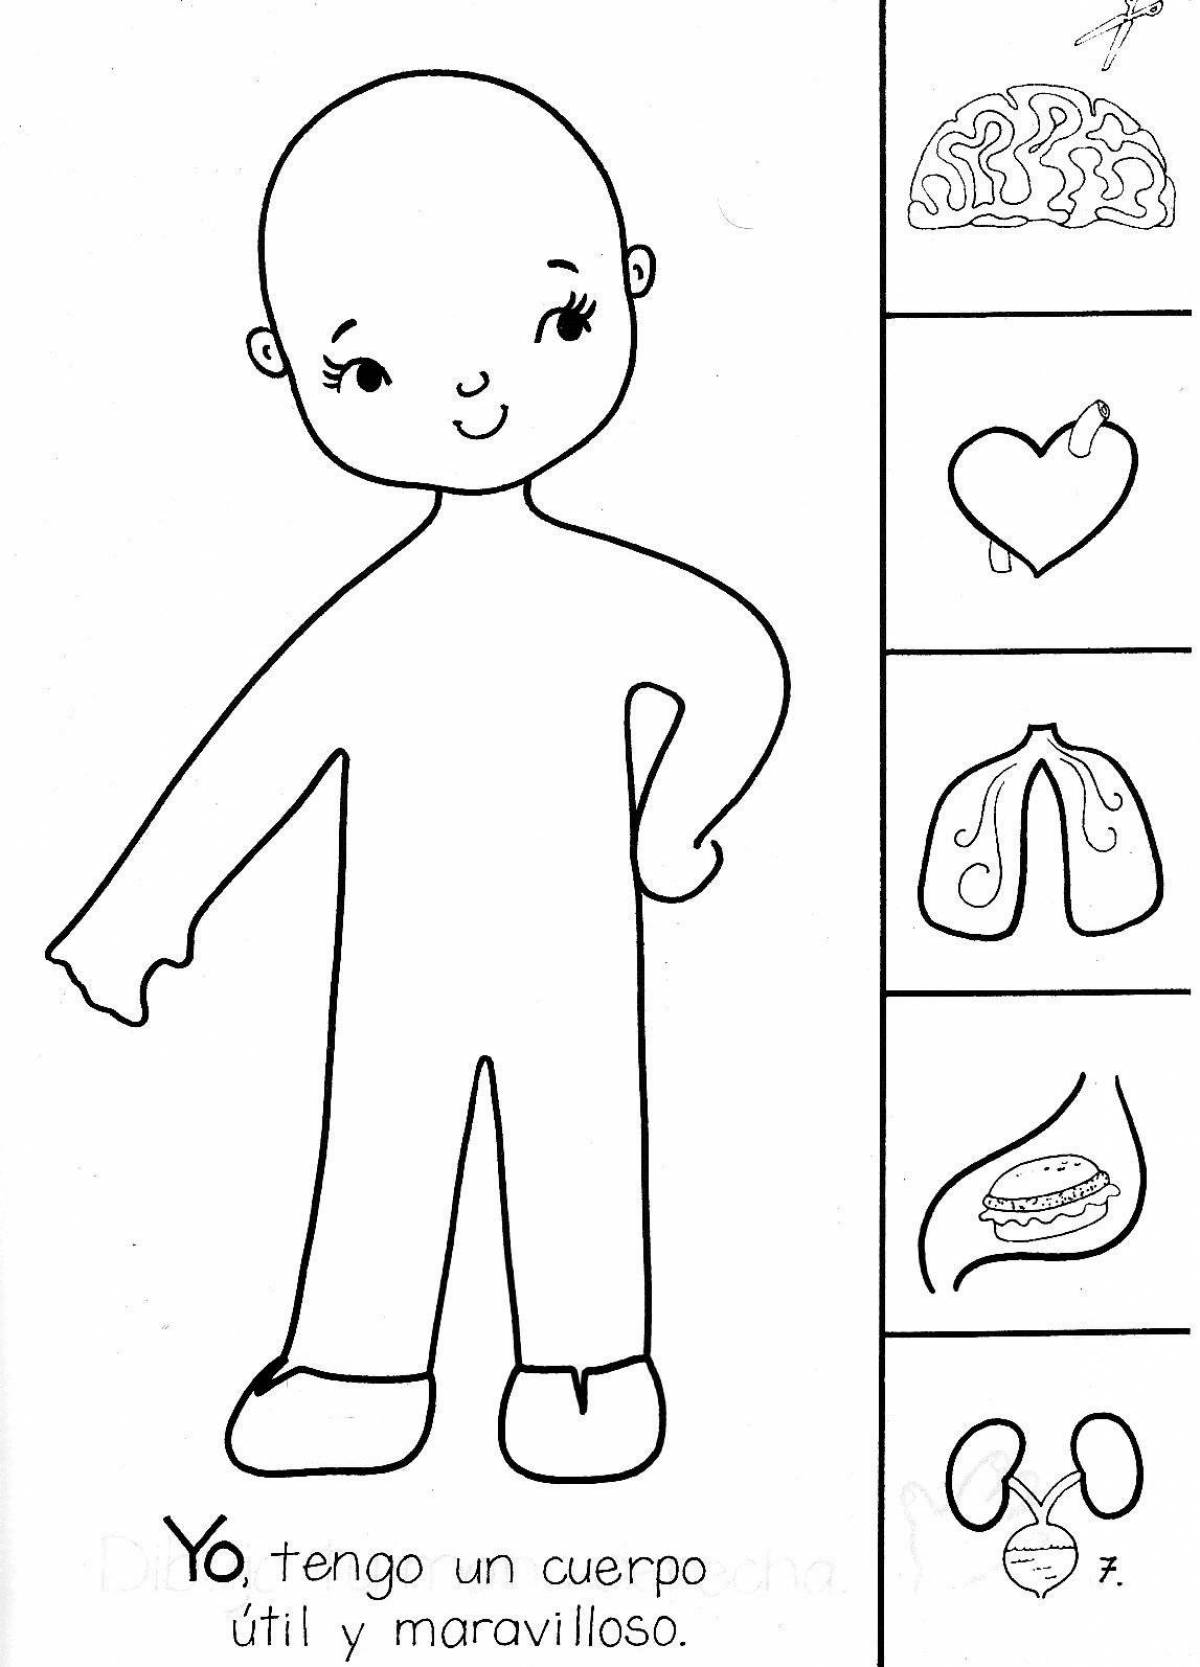 Human body for children #4